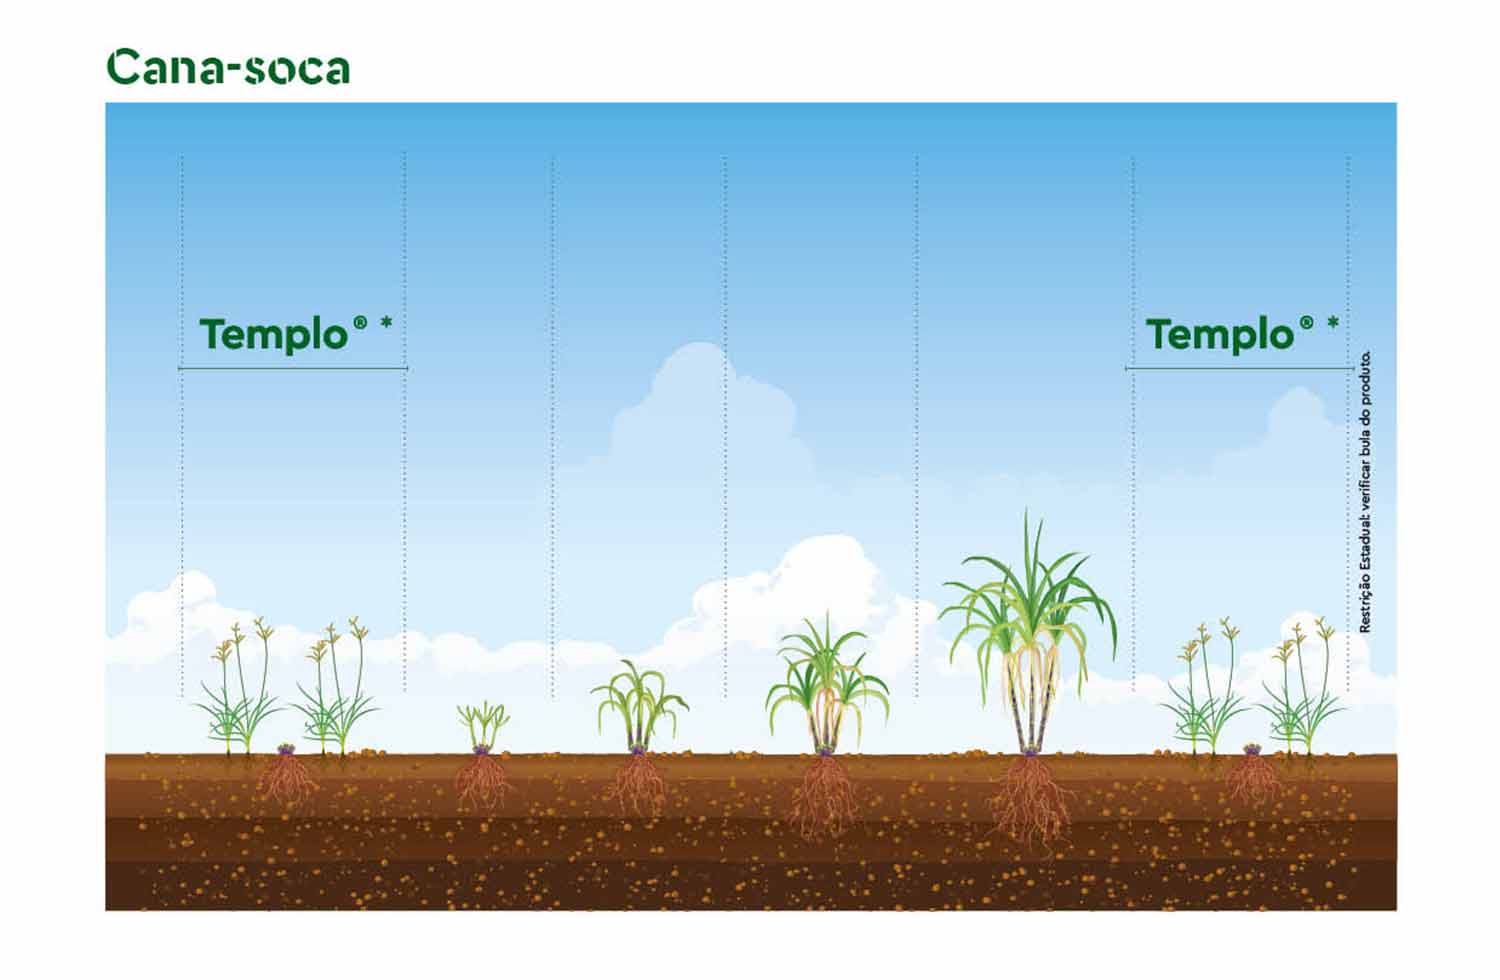 Posicionamento do herbicida Templo na cana-soca